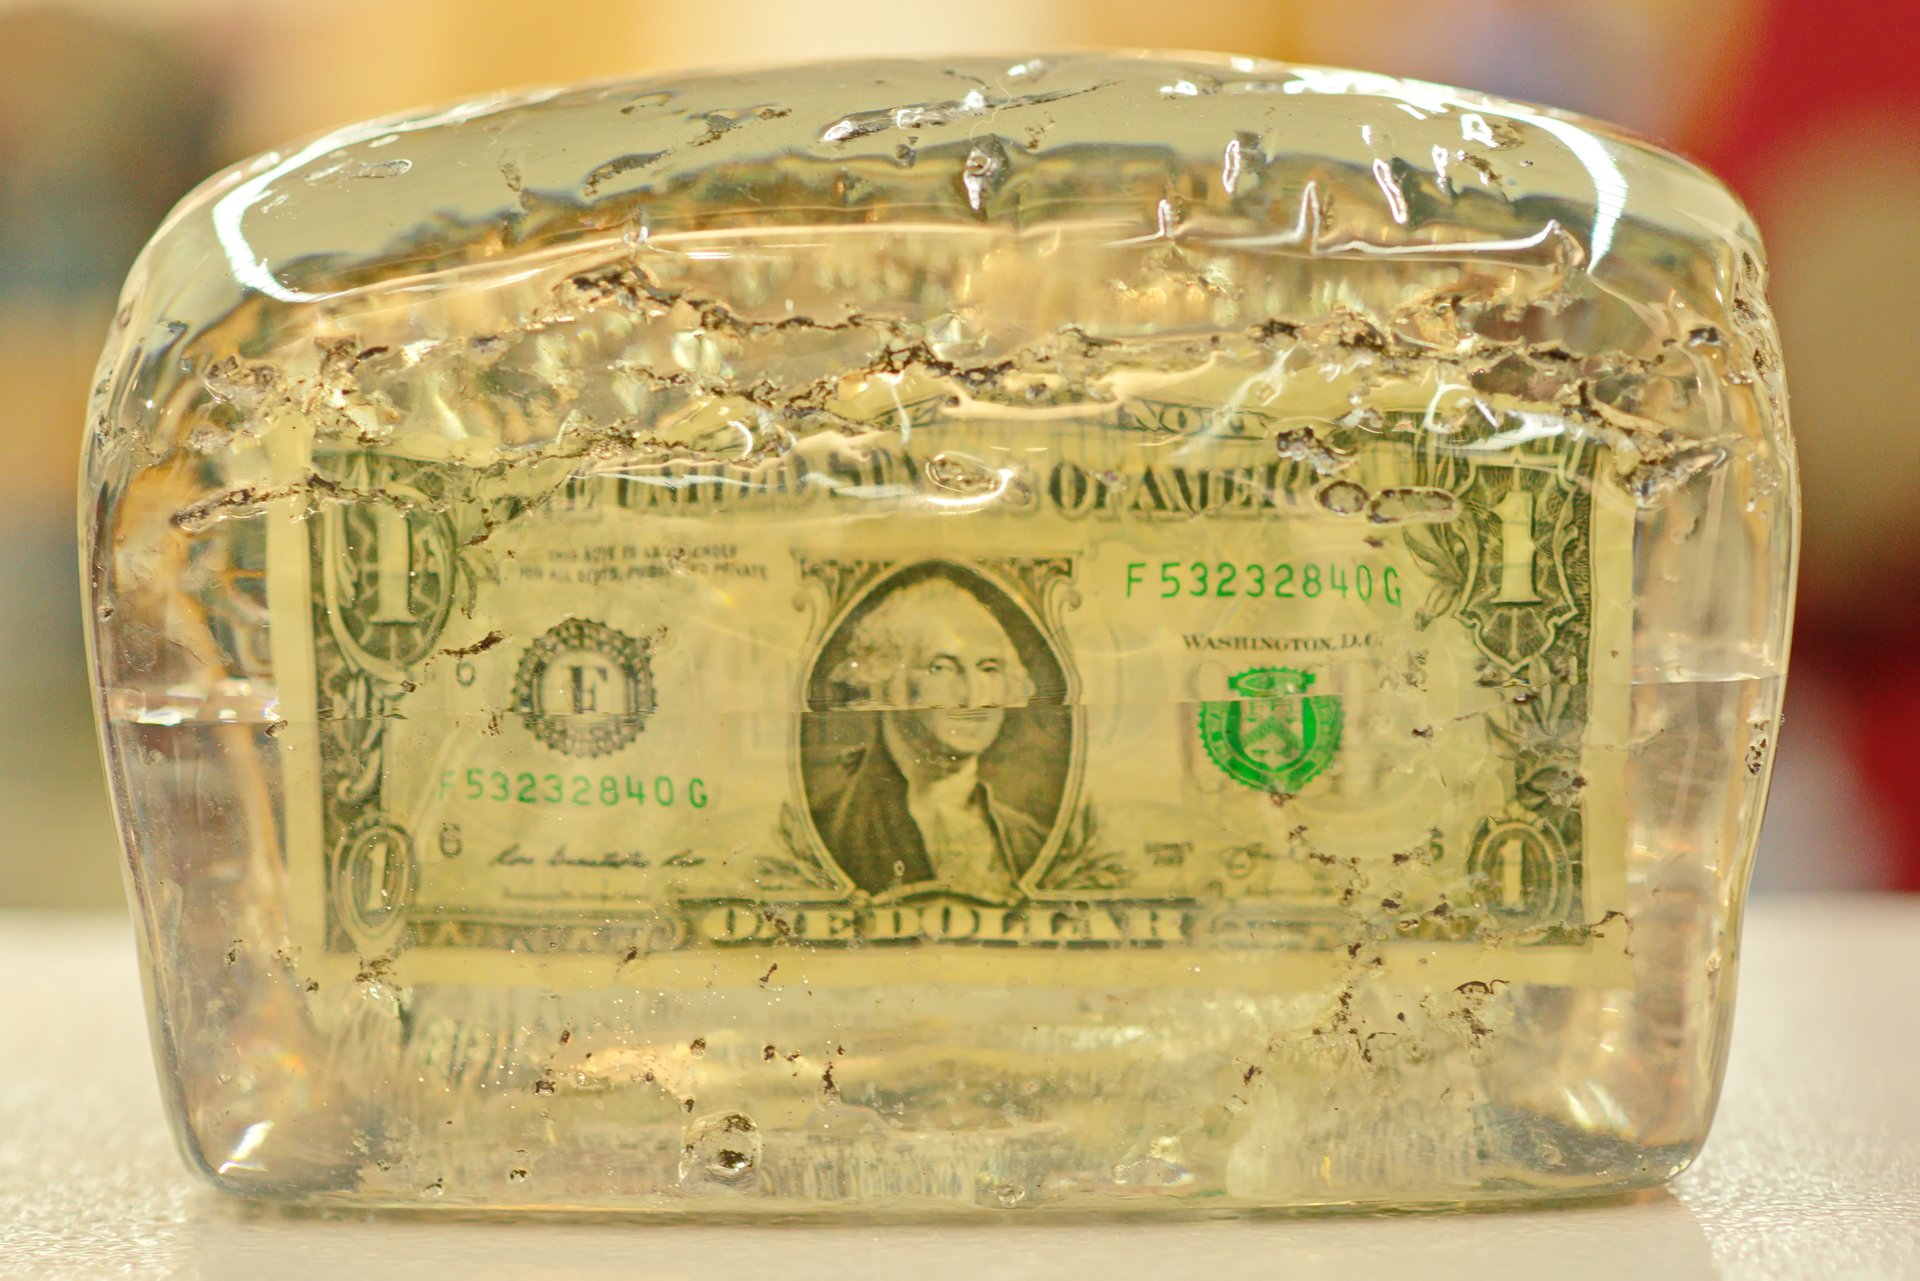 Frozen dollar